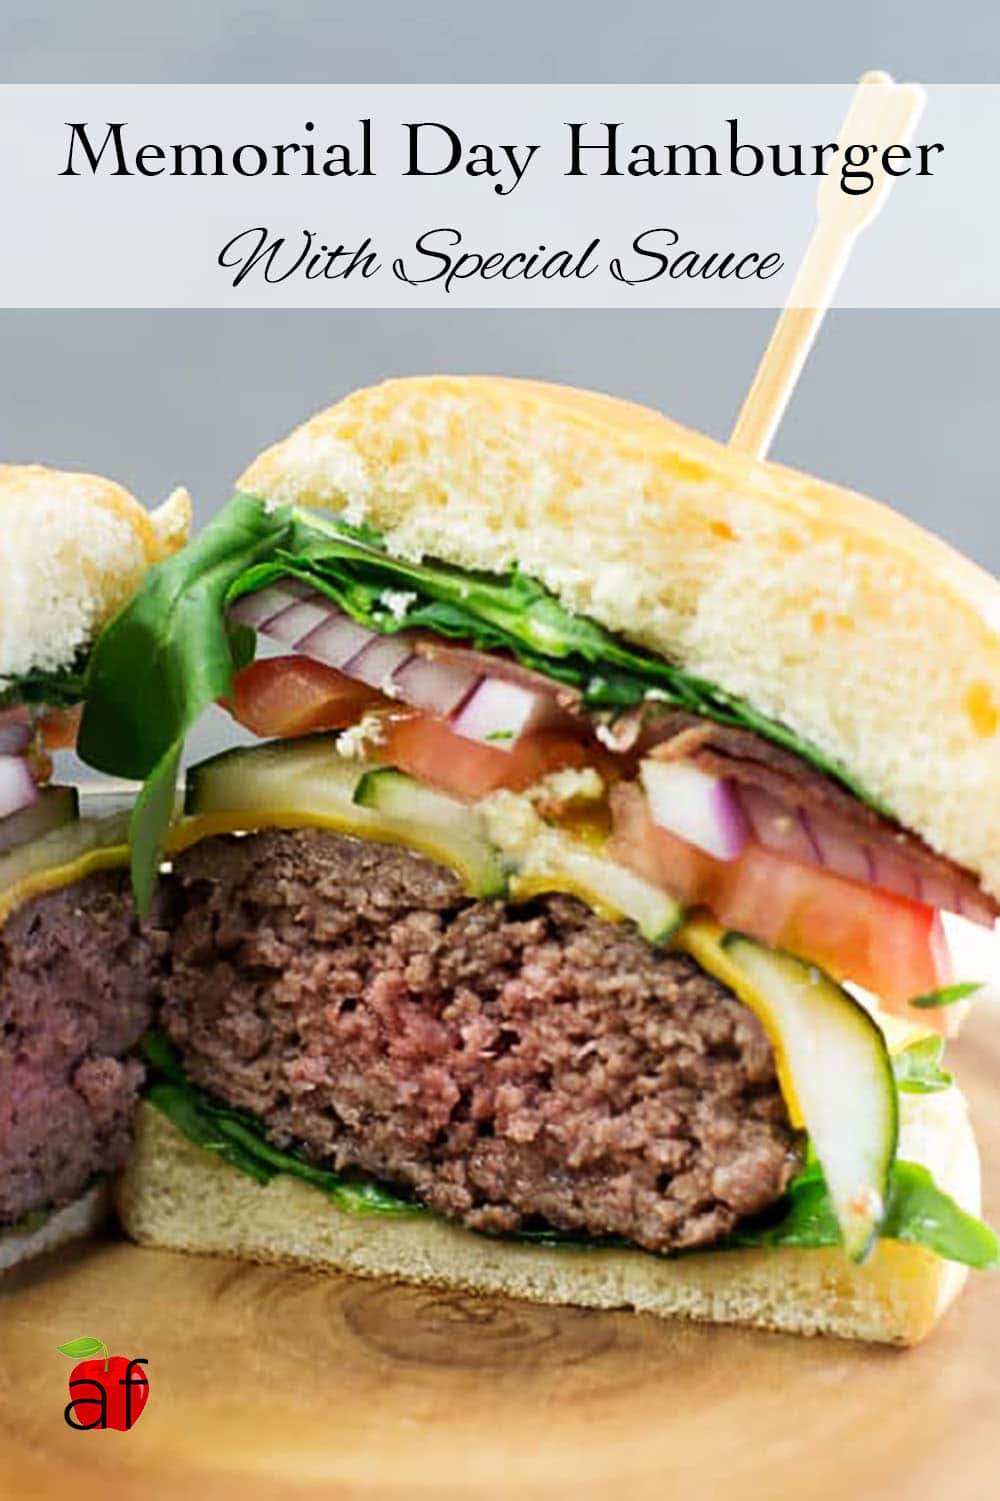 Big Juicy Hamburger Made With Secret Sauce Artzy Foodie